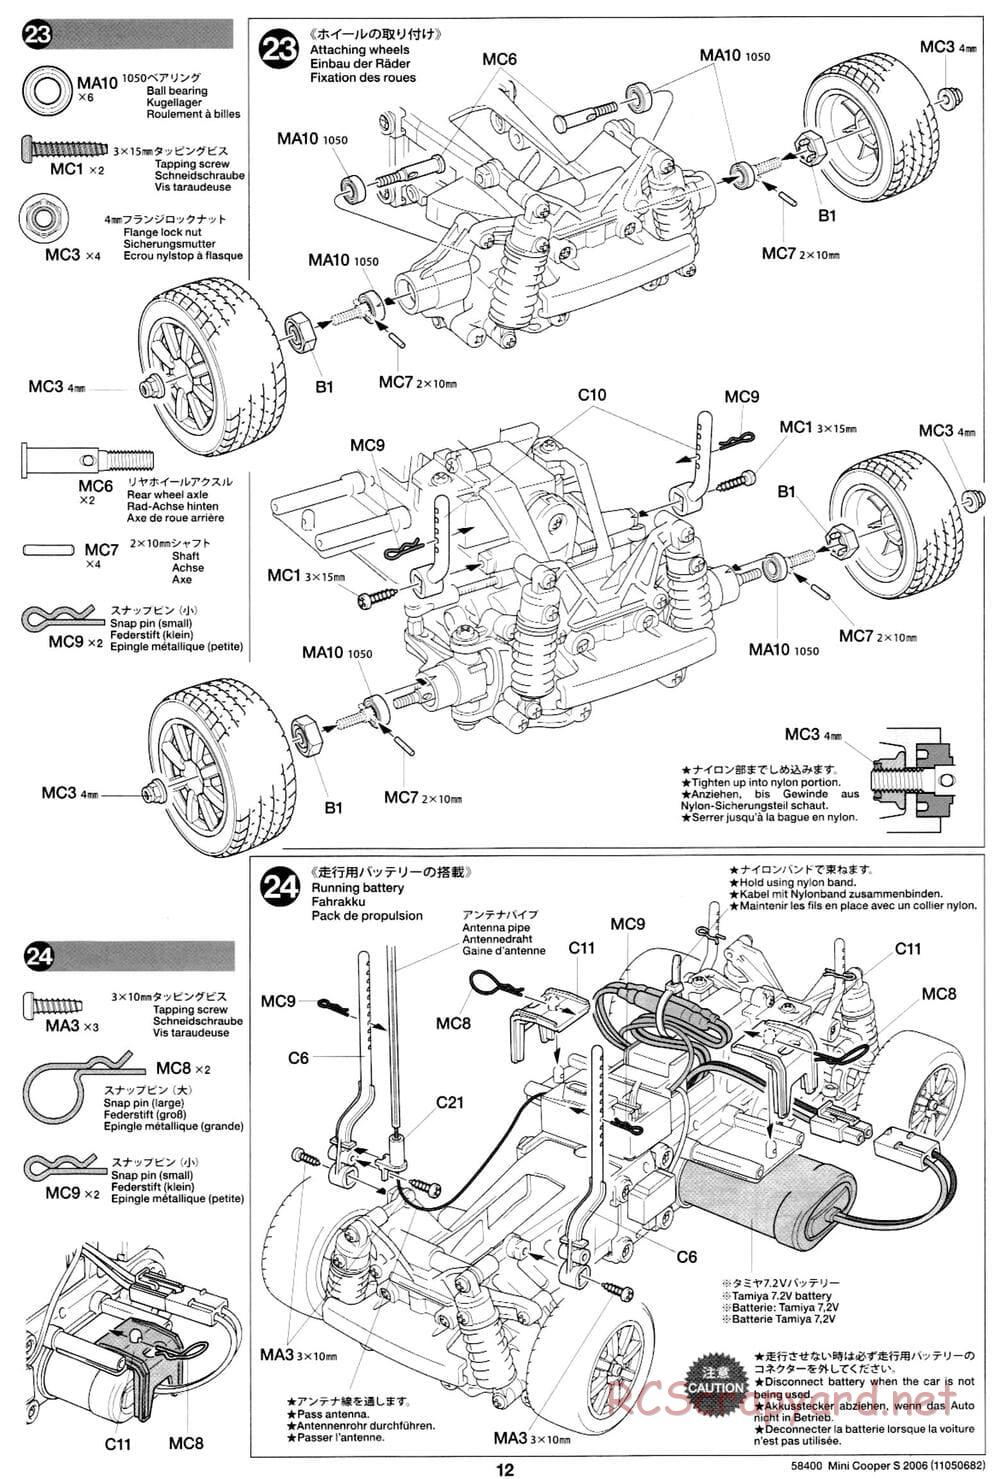 Tamiya - Mini Cooper S 2006 - M03L Chassis - Manual - Page 12